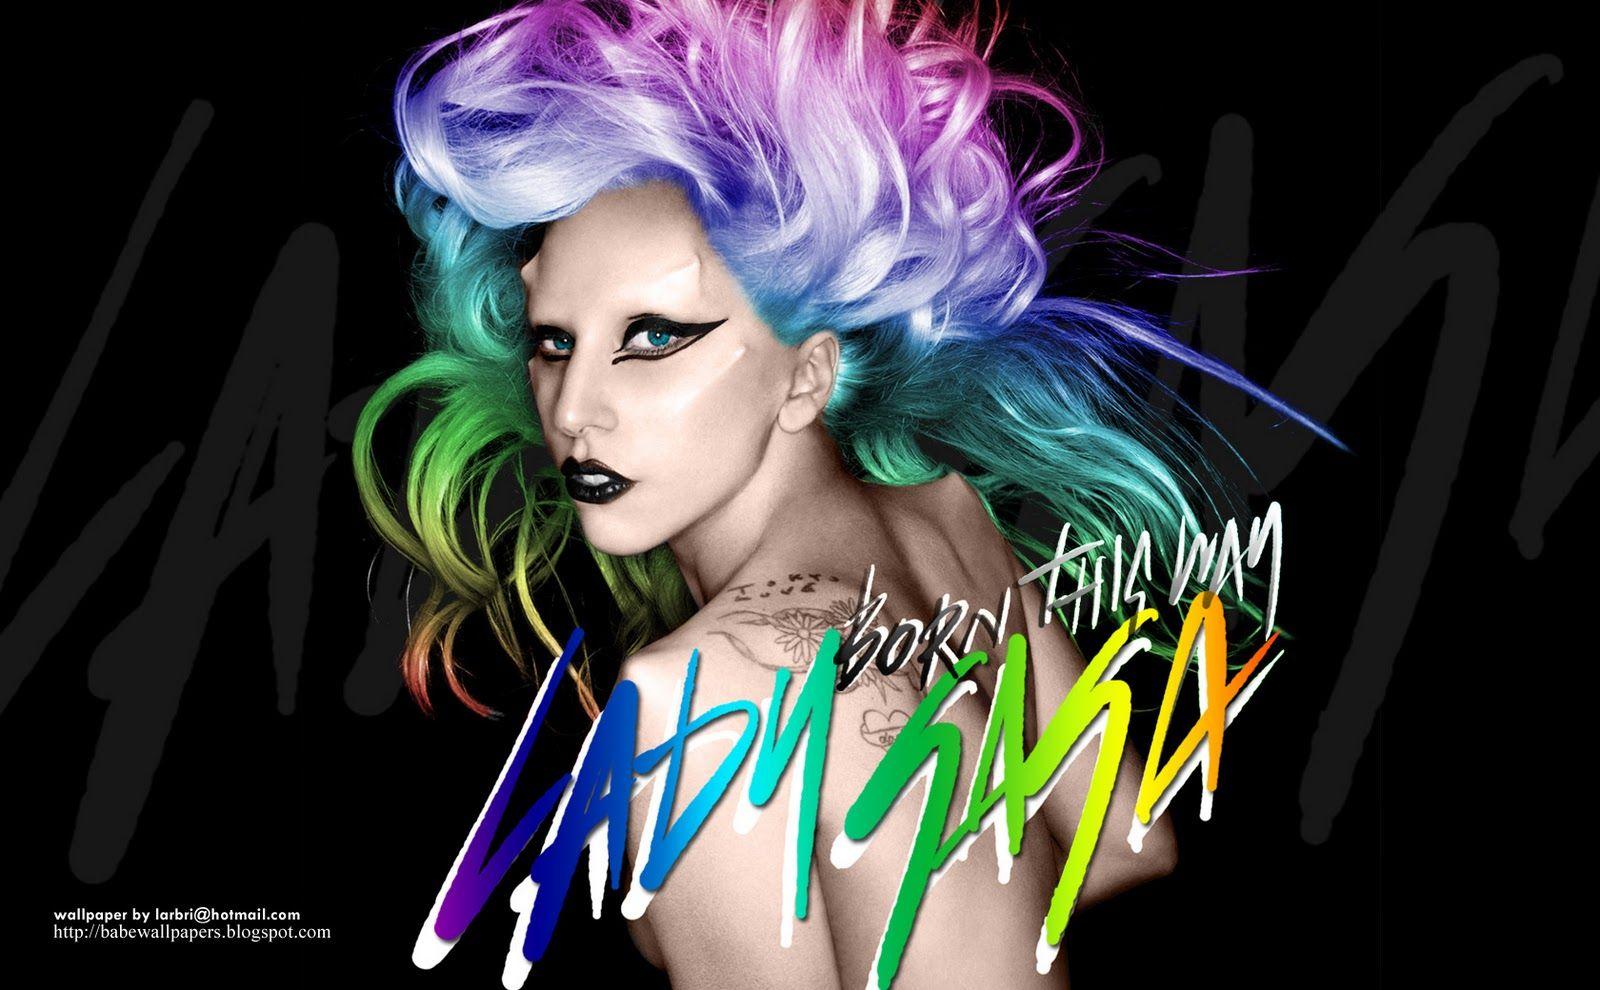 Lady gaga dj tons. Lady Gaga born this way обложка. Леди Гага Борн ЗИС Вей. Леди Гага диджей. Леди Гага Монстер.